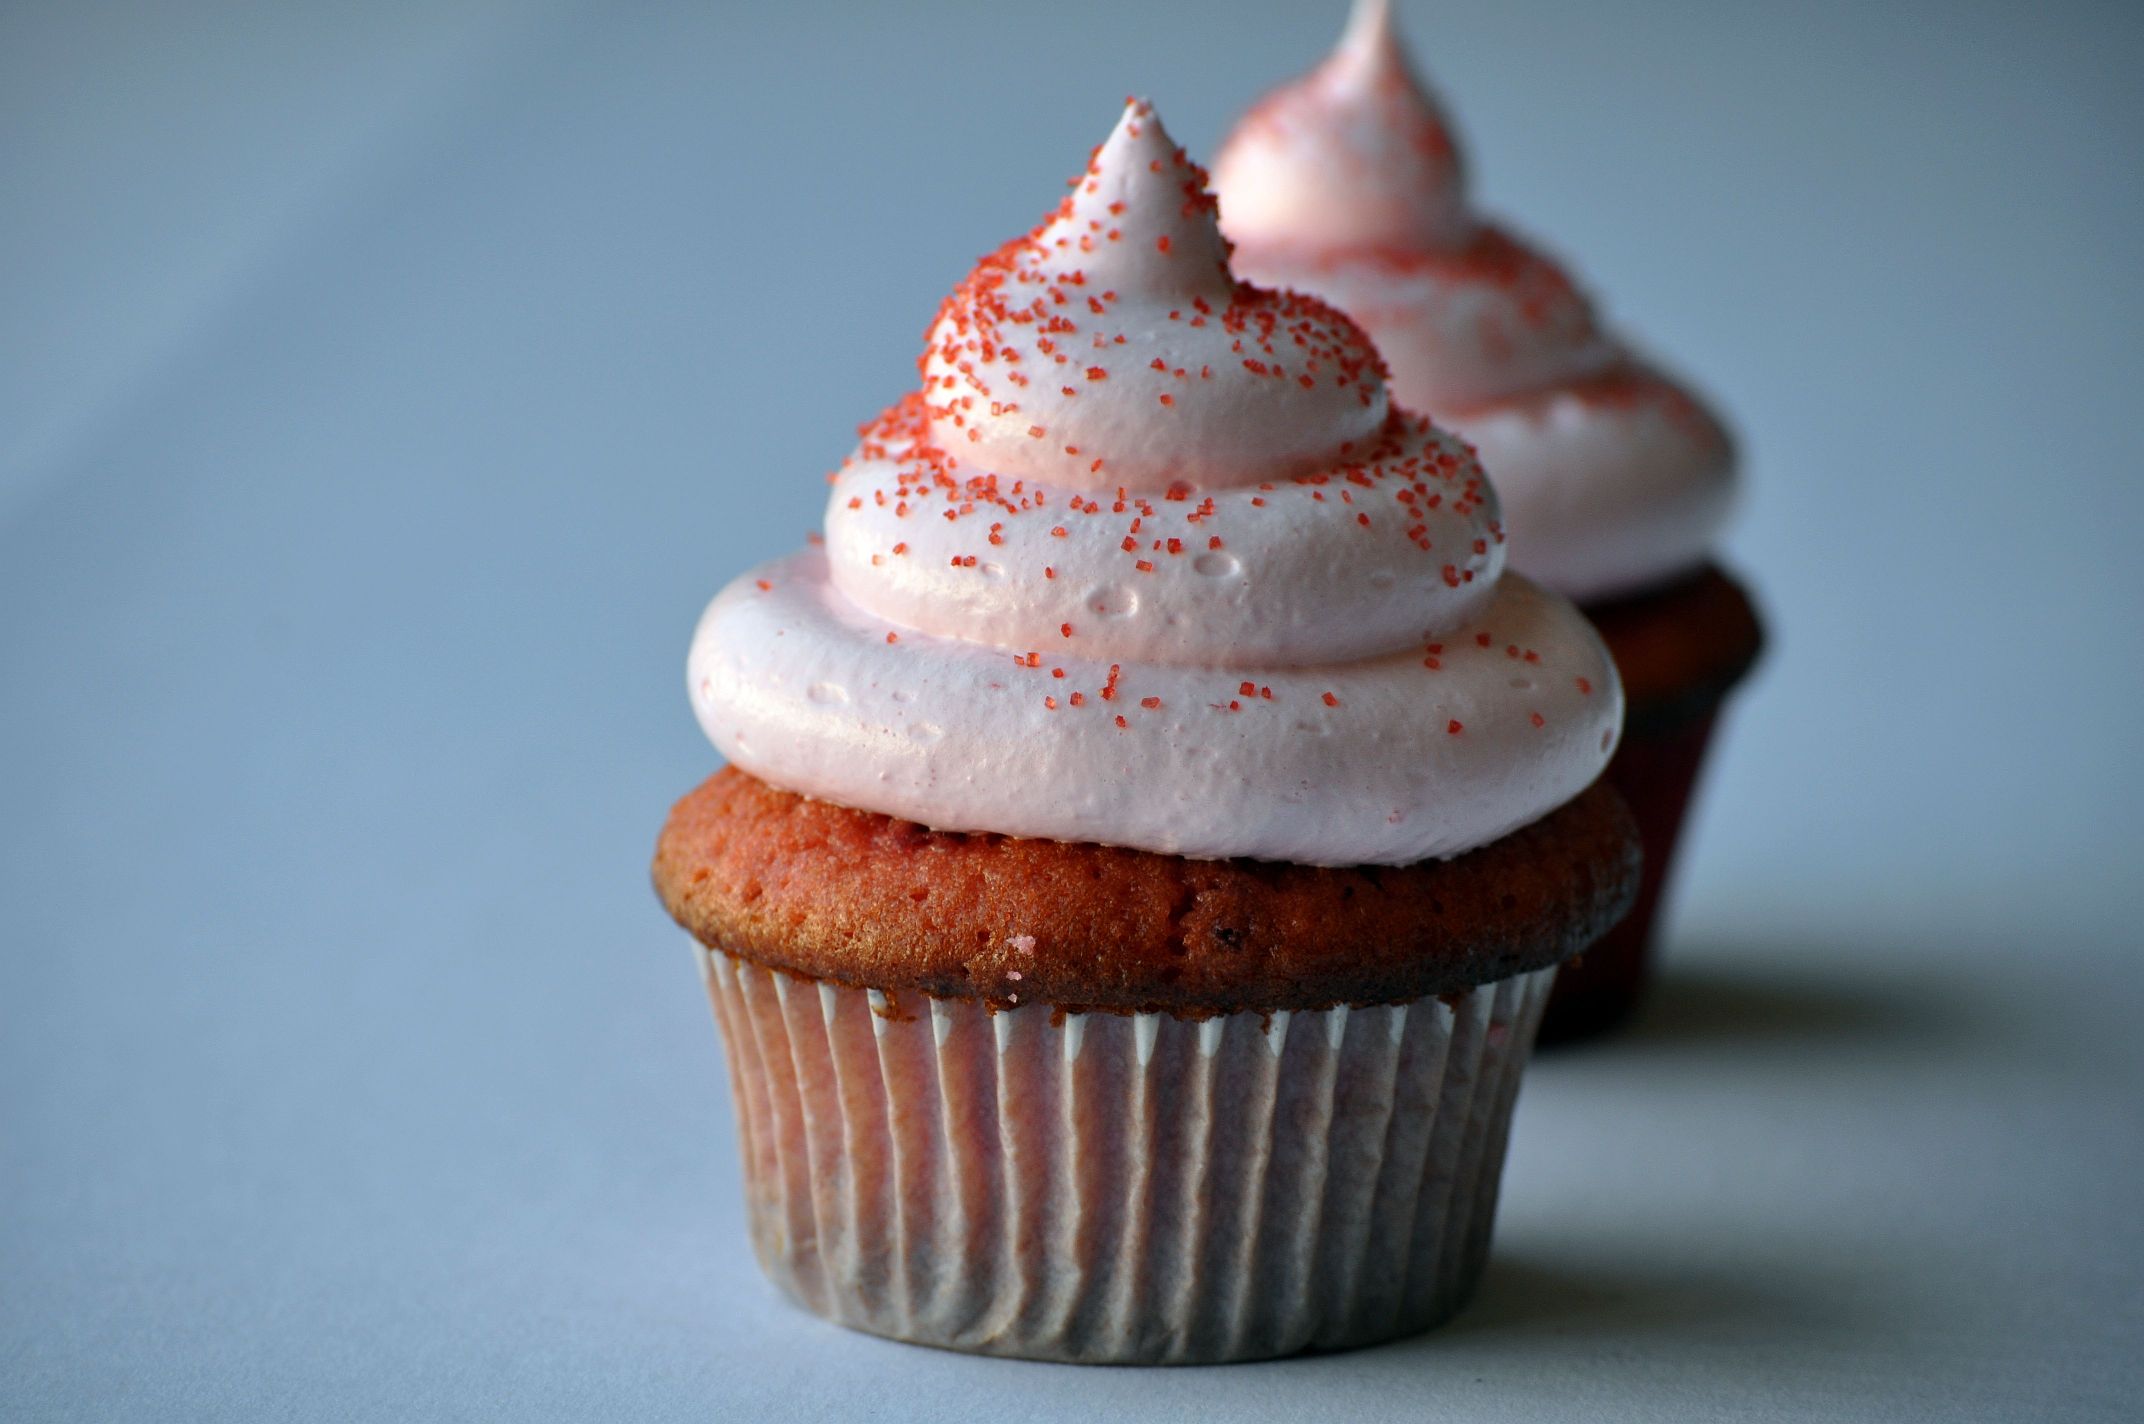 Filled Cupcake Recipes Using Cake Mix